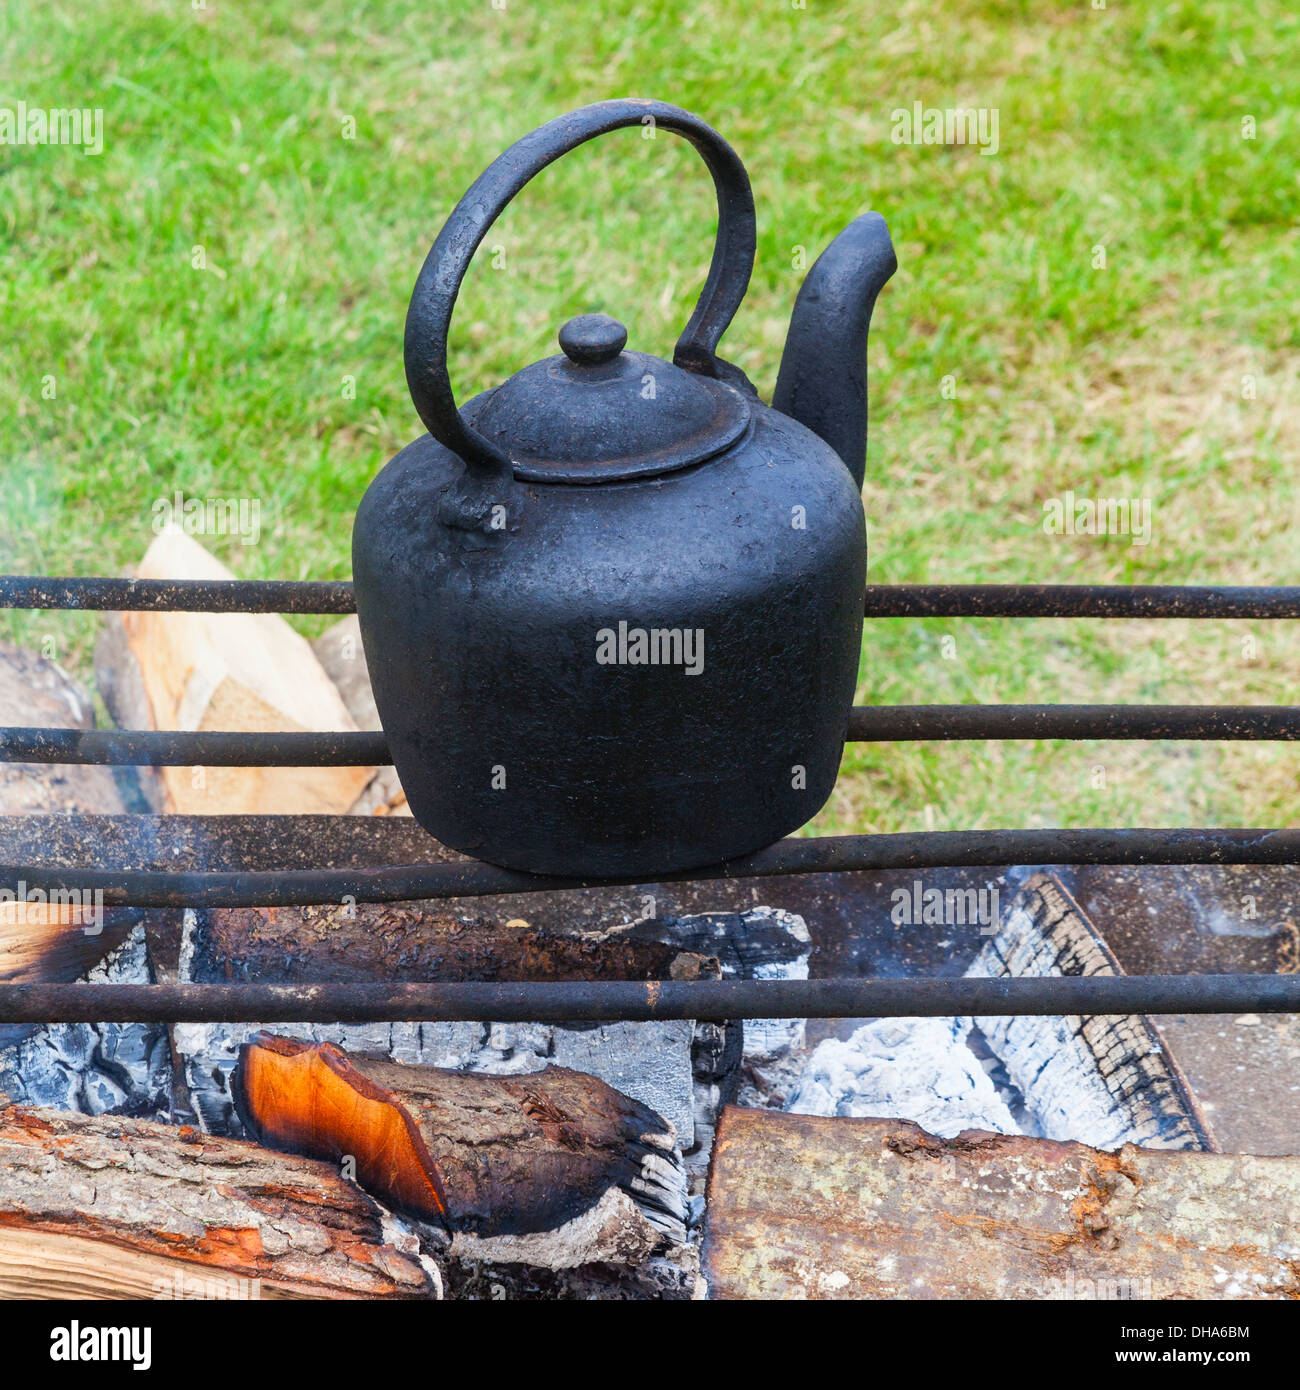 https://c8.alamy.com/comp/DHA6BM/a-kettle-on-a-campfire-DHA6BM.jpg